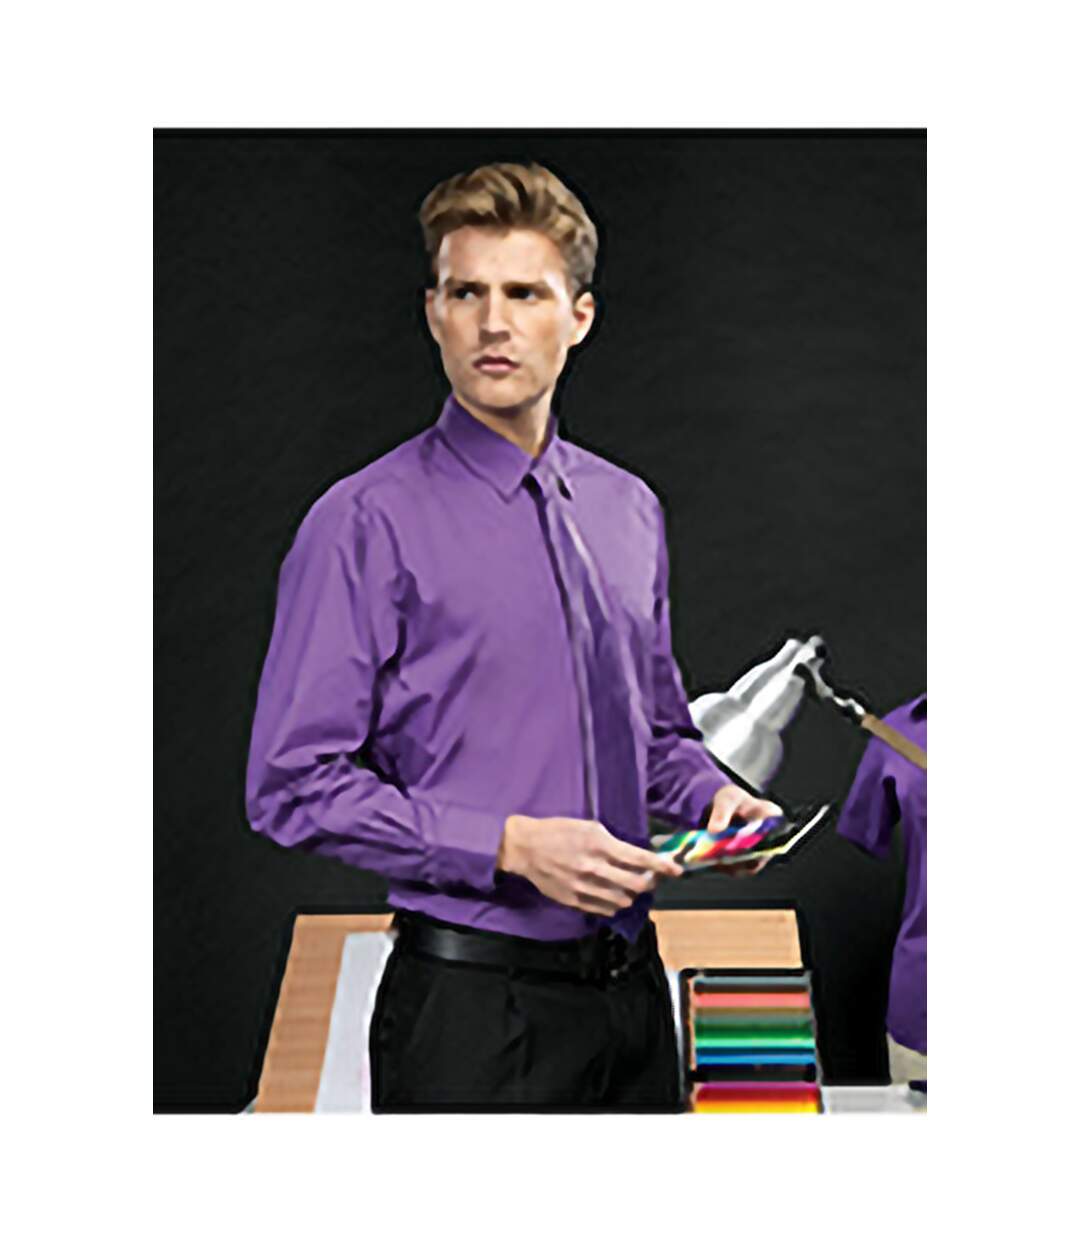 Premier Mens Long Sleeve Formal Plain Work Poplin Shirt (Royal) - UTRW1081